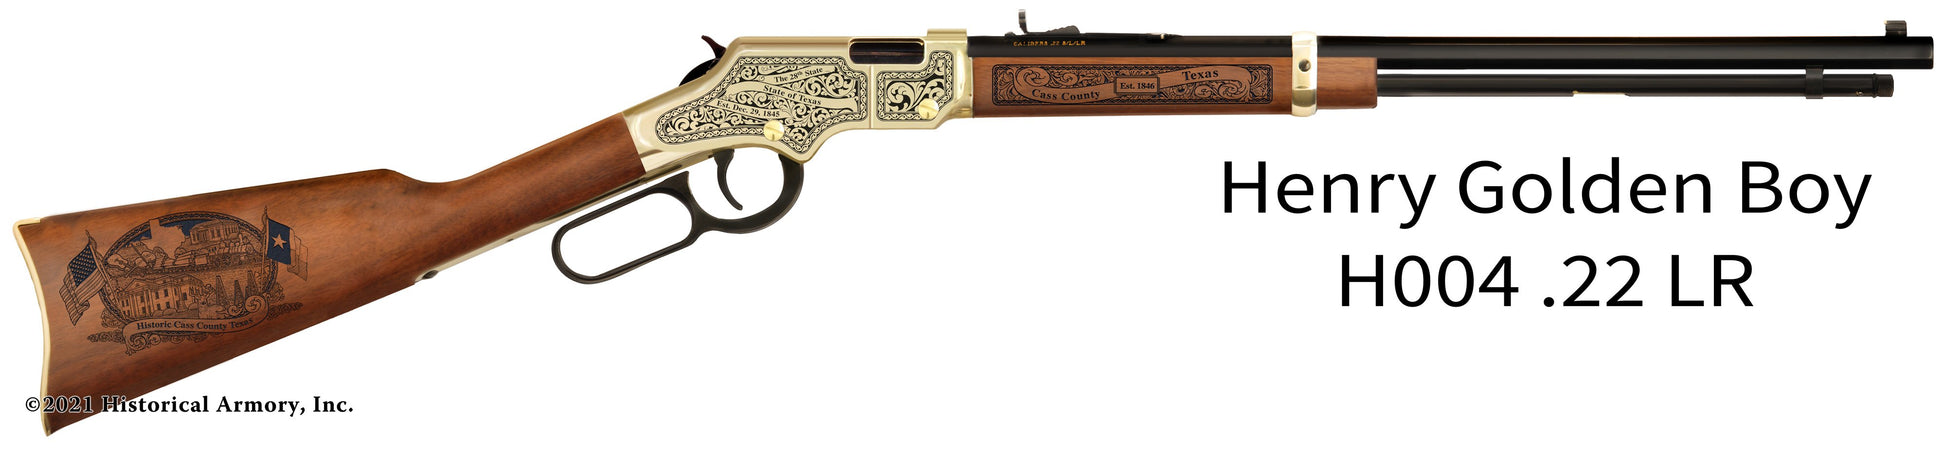 Cass County Texas Engraved Henry Golden Boy Rifle